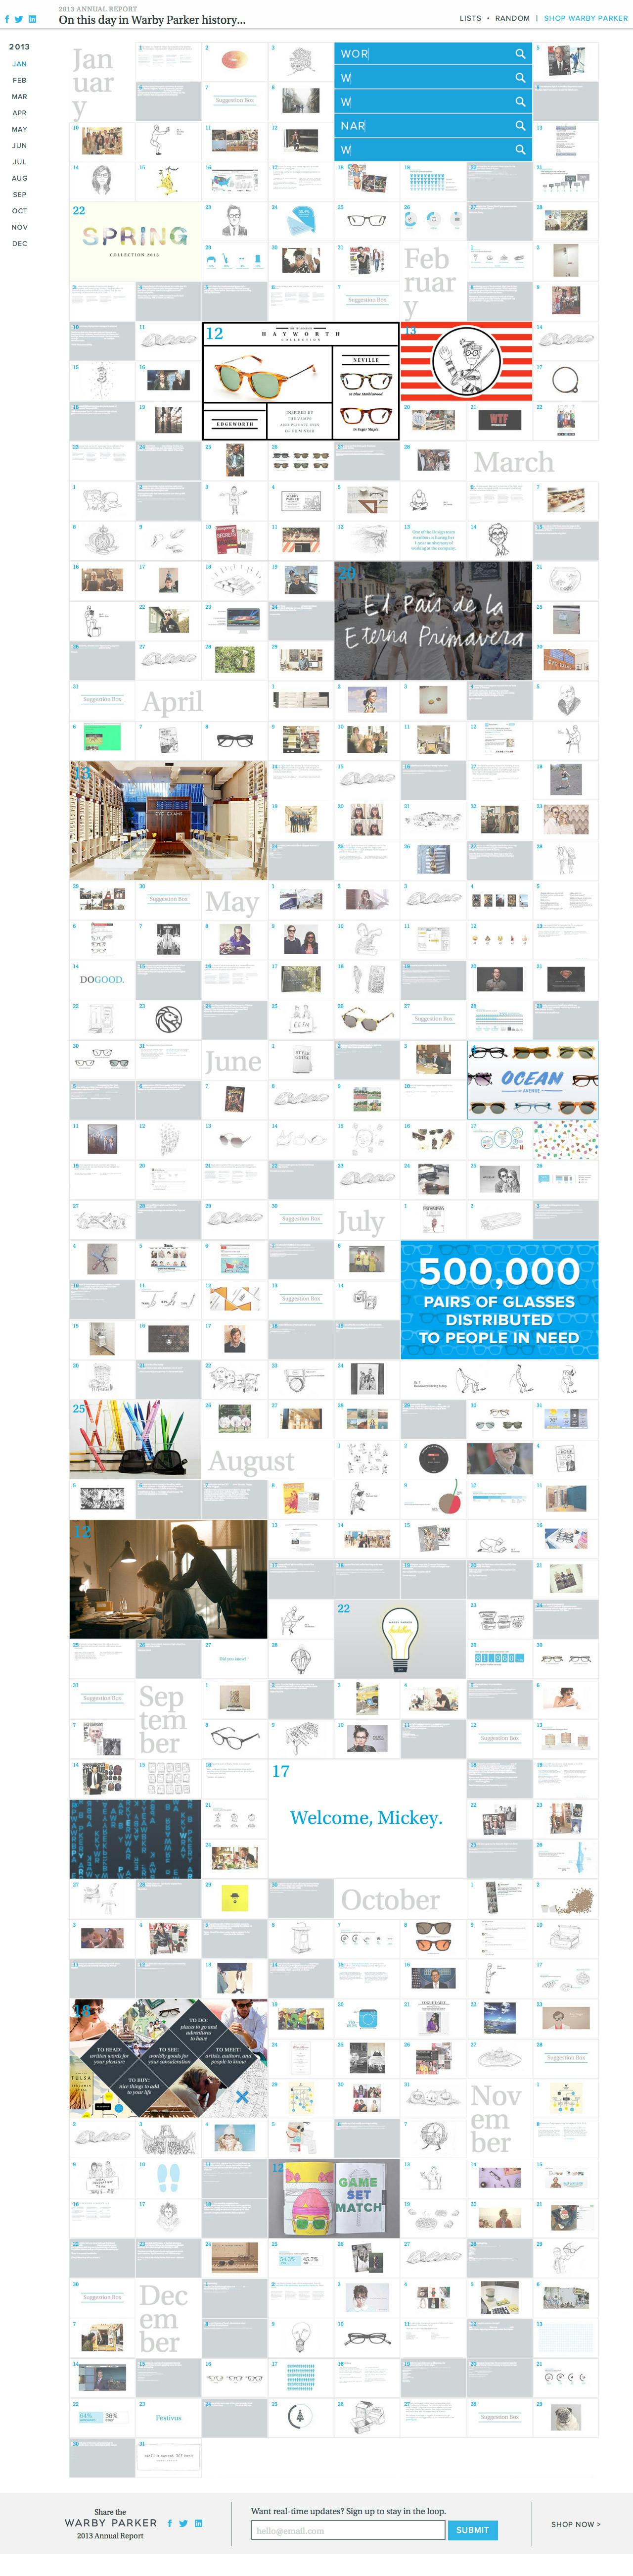 Warby Parker 2013 Annual Report Website Screenshot